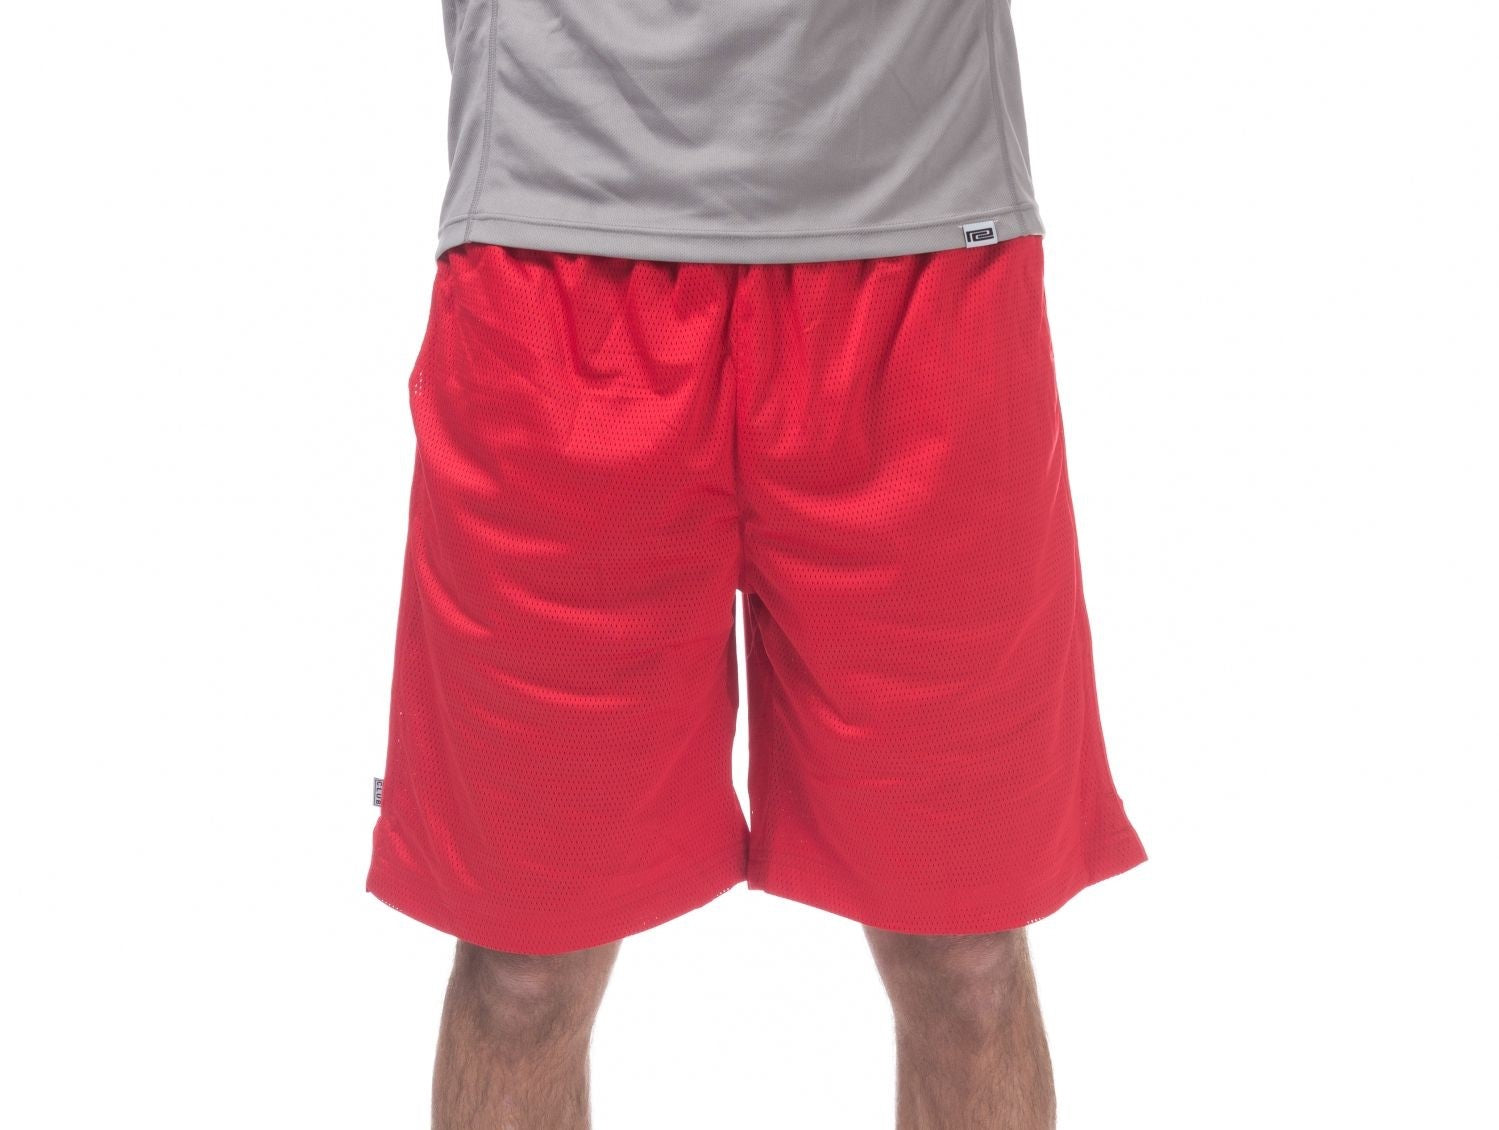 Pro Club Men's Comfort Mesh Athletic Shorts - T Shirt Mall LLC. Buy qu